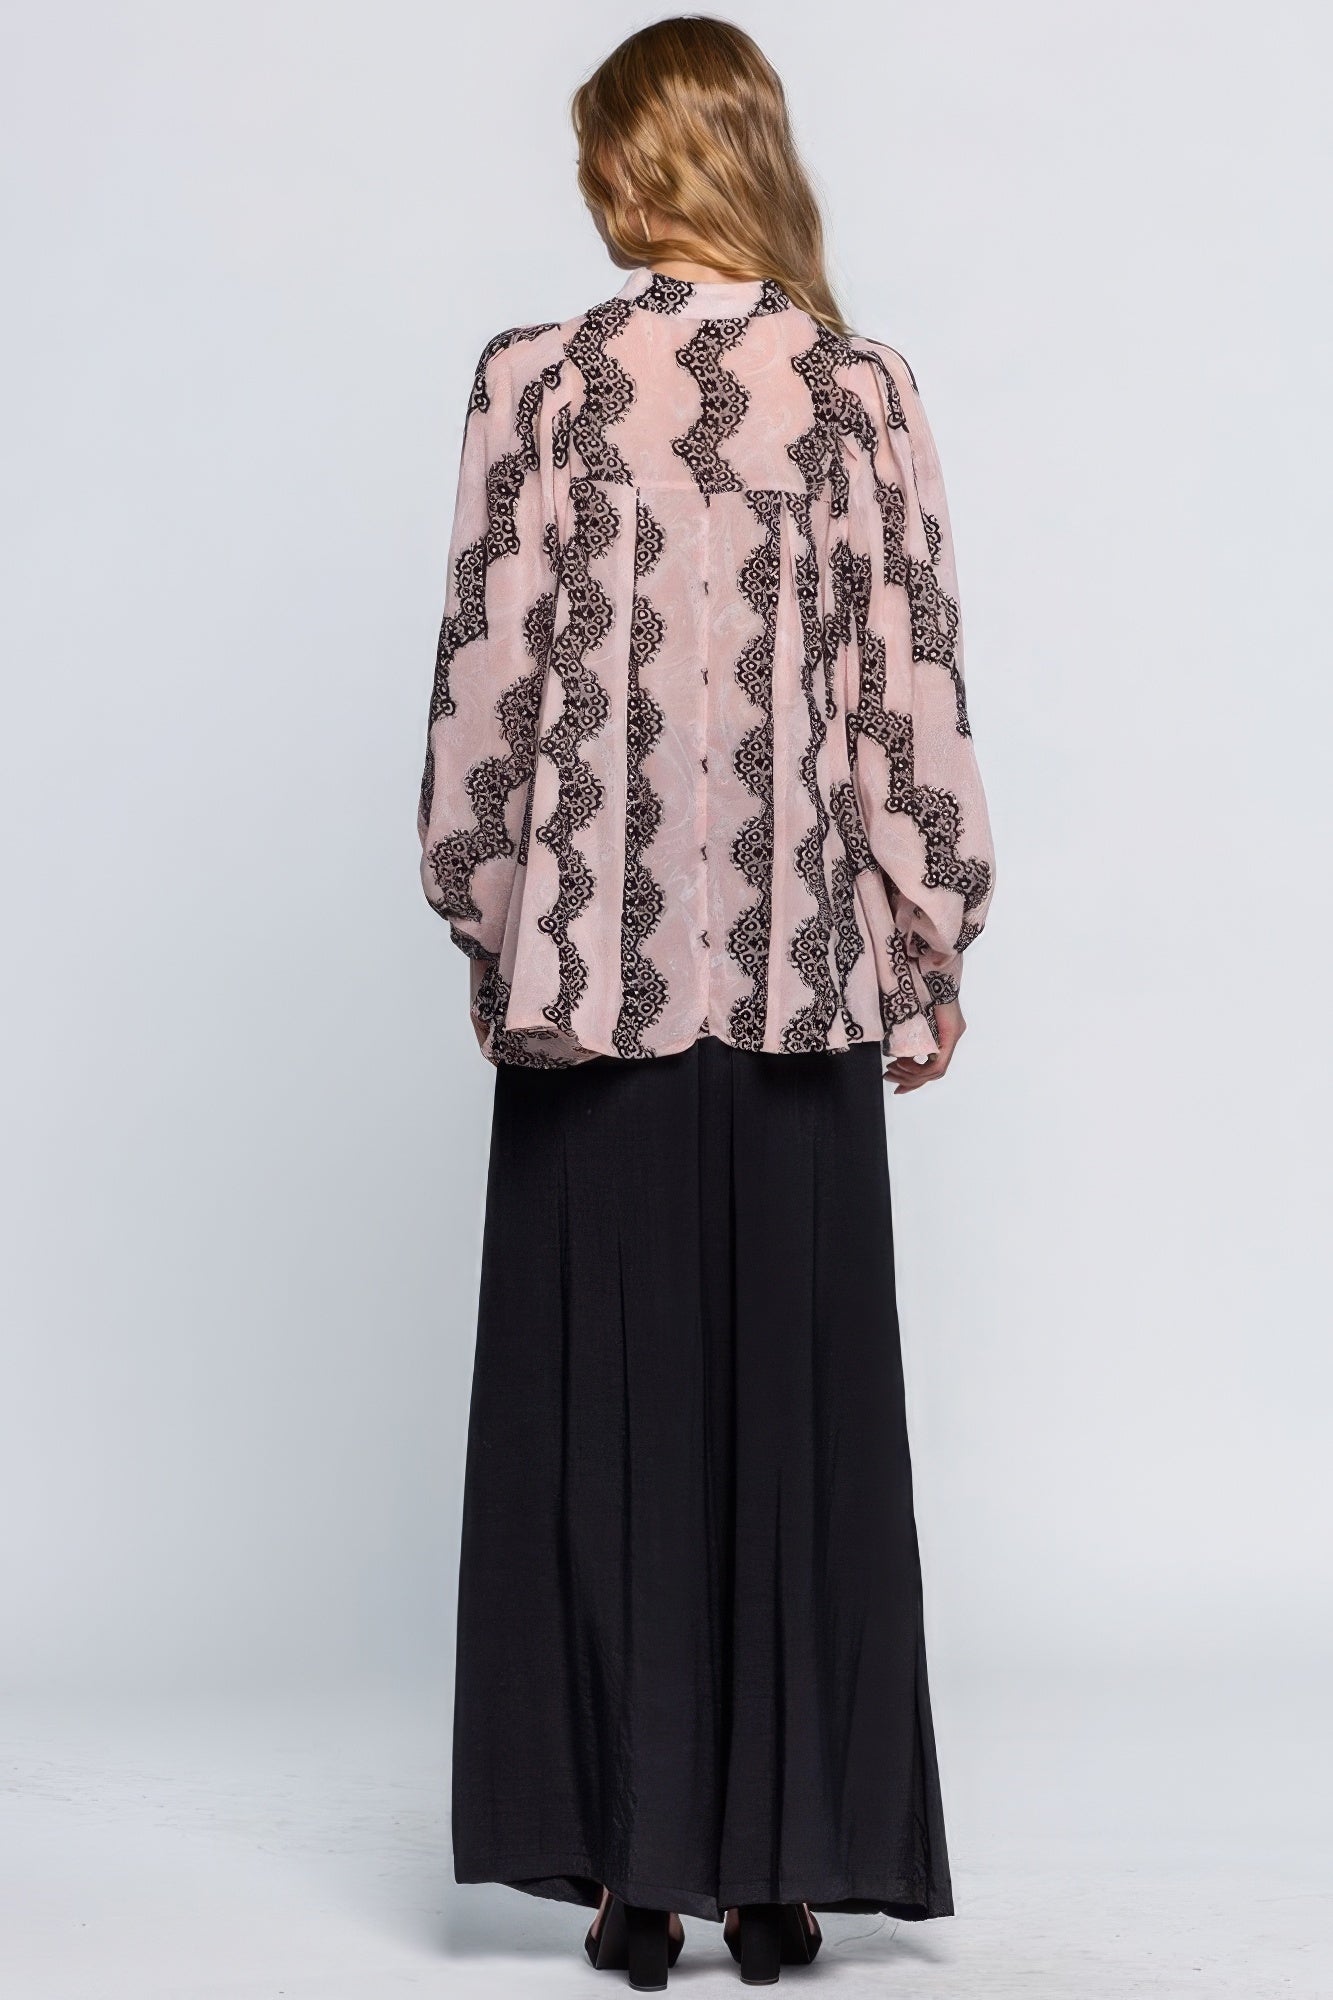 See Through Shirt With Lace Detail - Tigbuls Variety Fashion